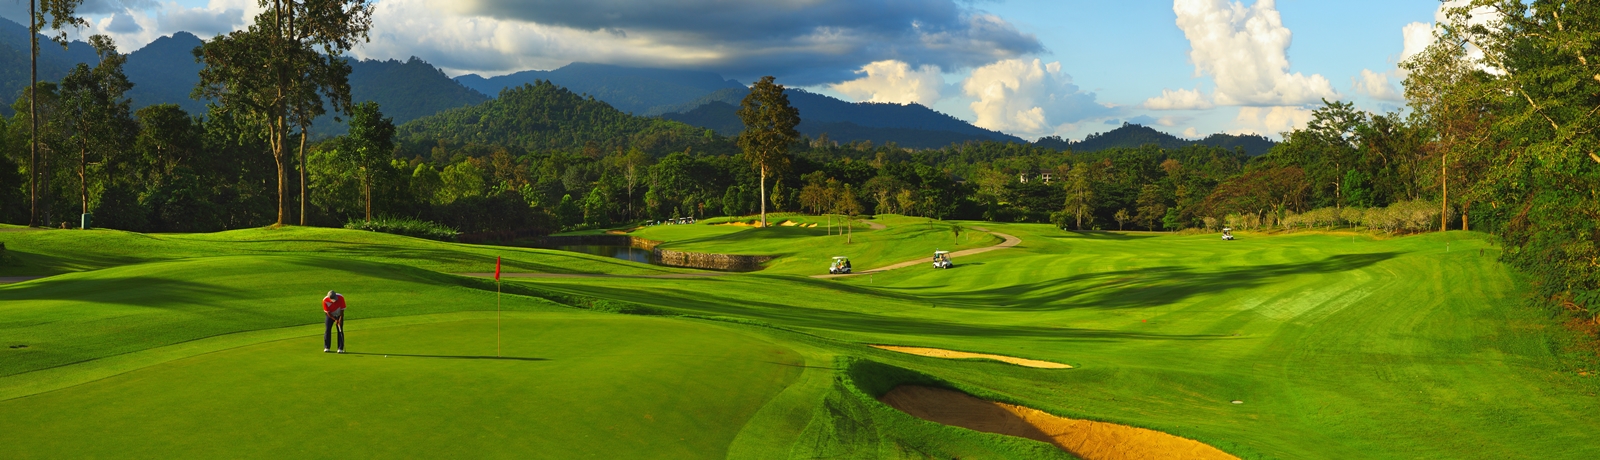 Beautiful Golf Course at Chatrium Golf Resort